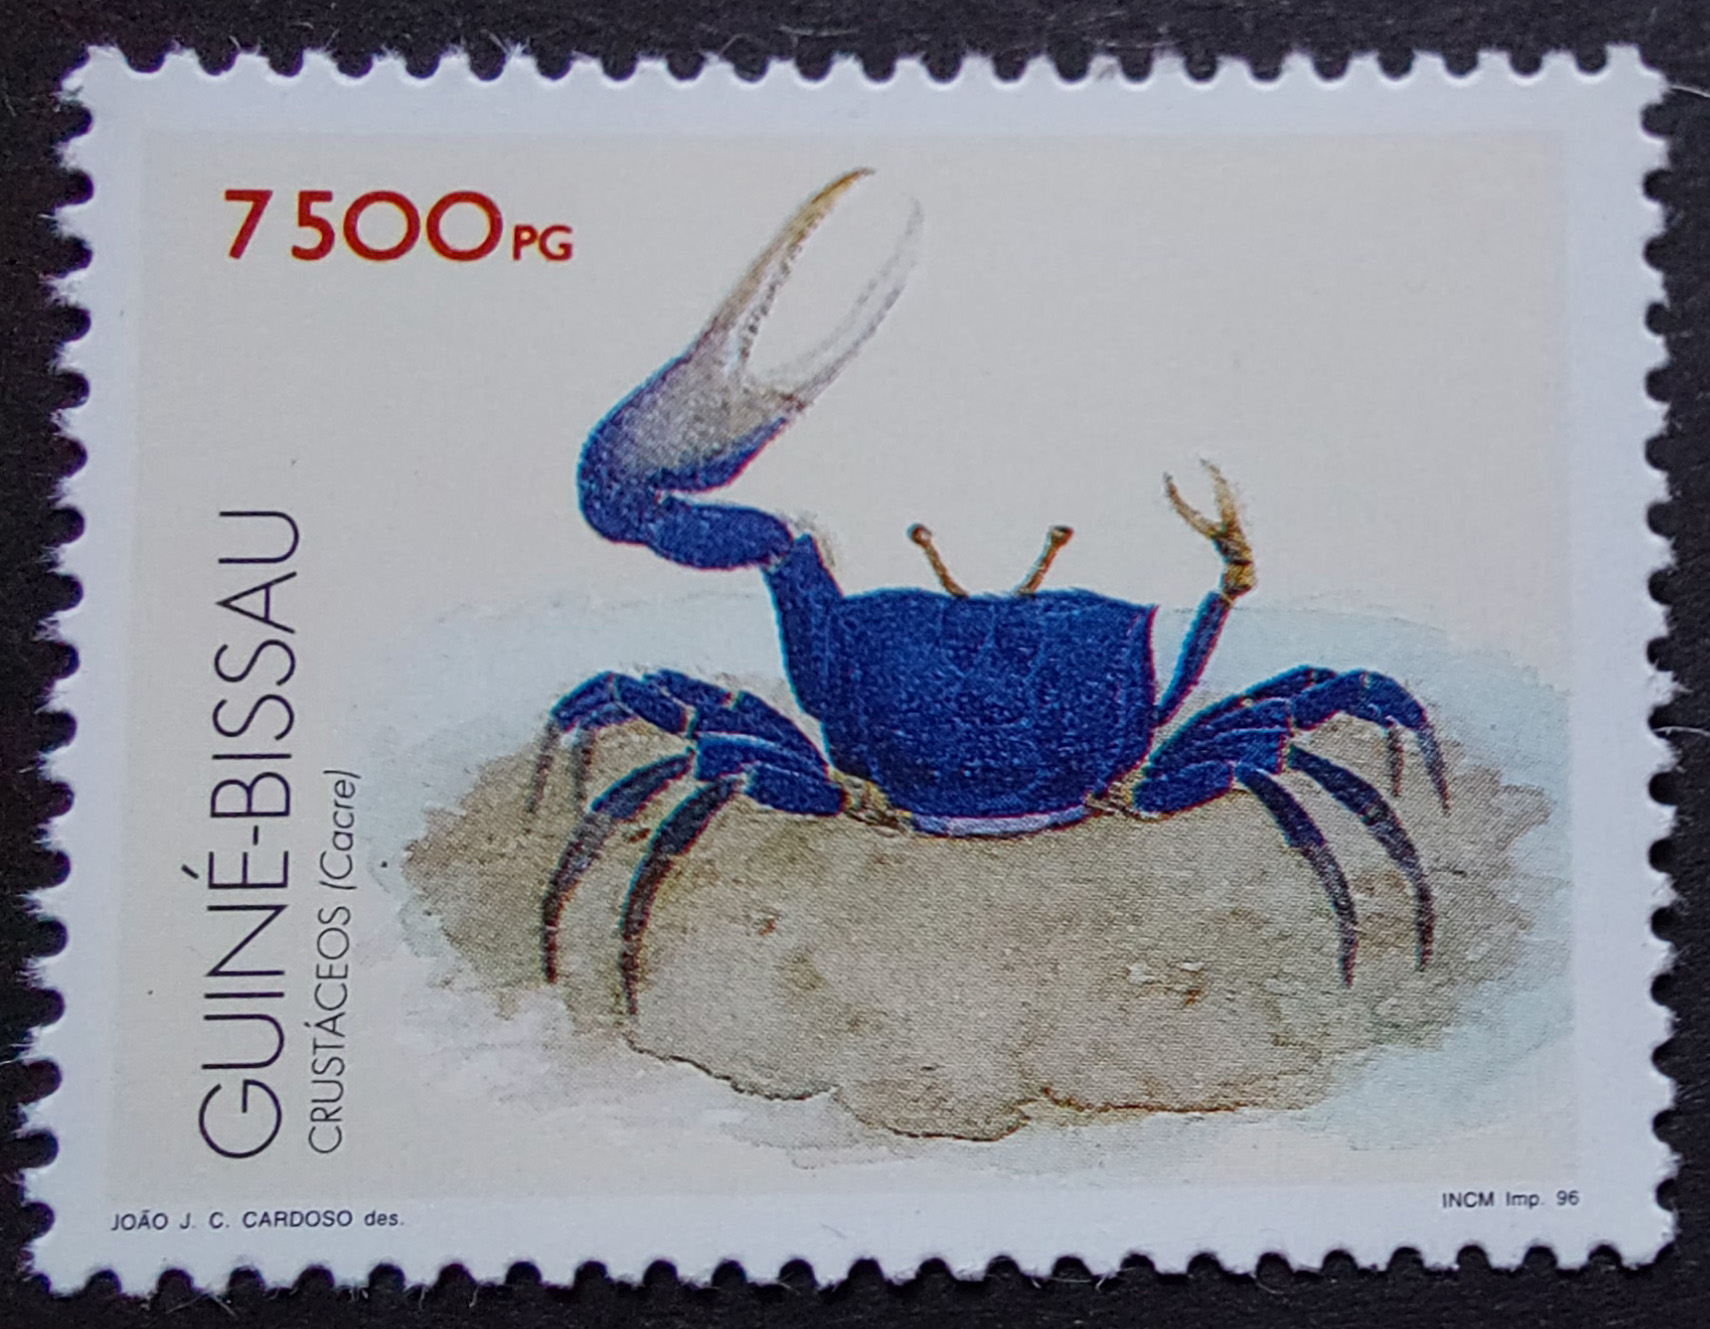 Postage Stamp: Guinea-Bissau (1996) image